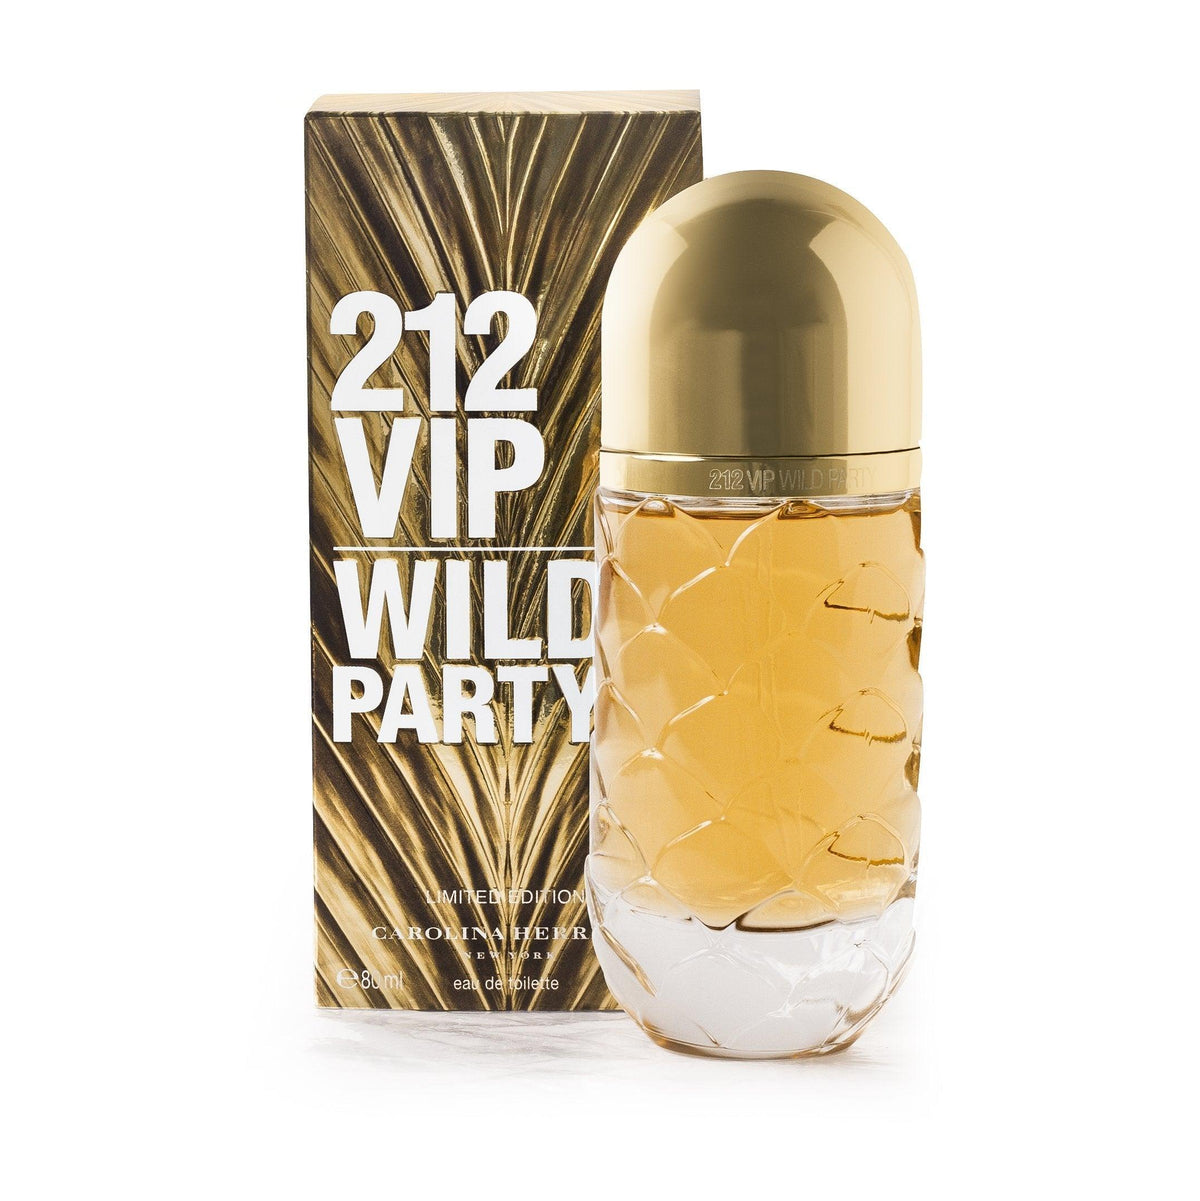 212 VIP Wild Party Eau de Toilette Spray for Women by Carolina Herrera